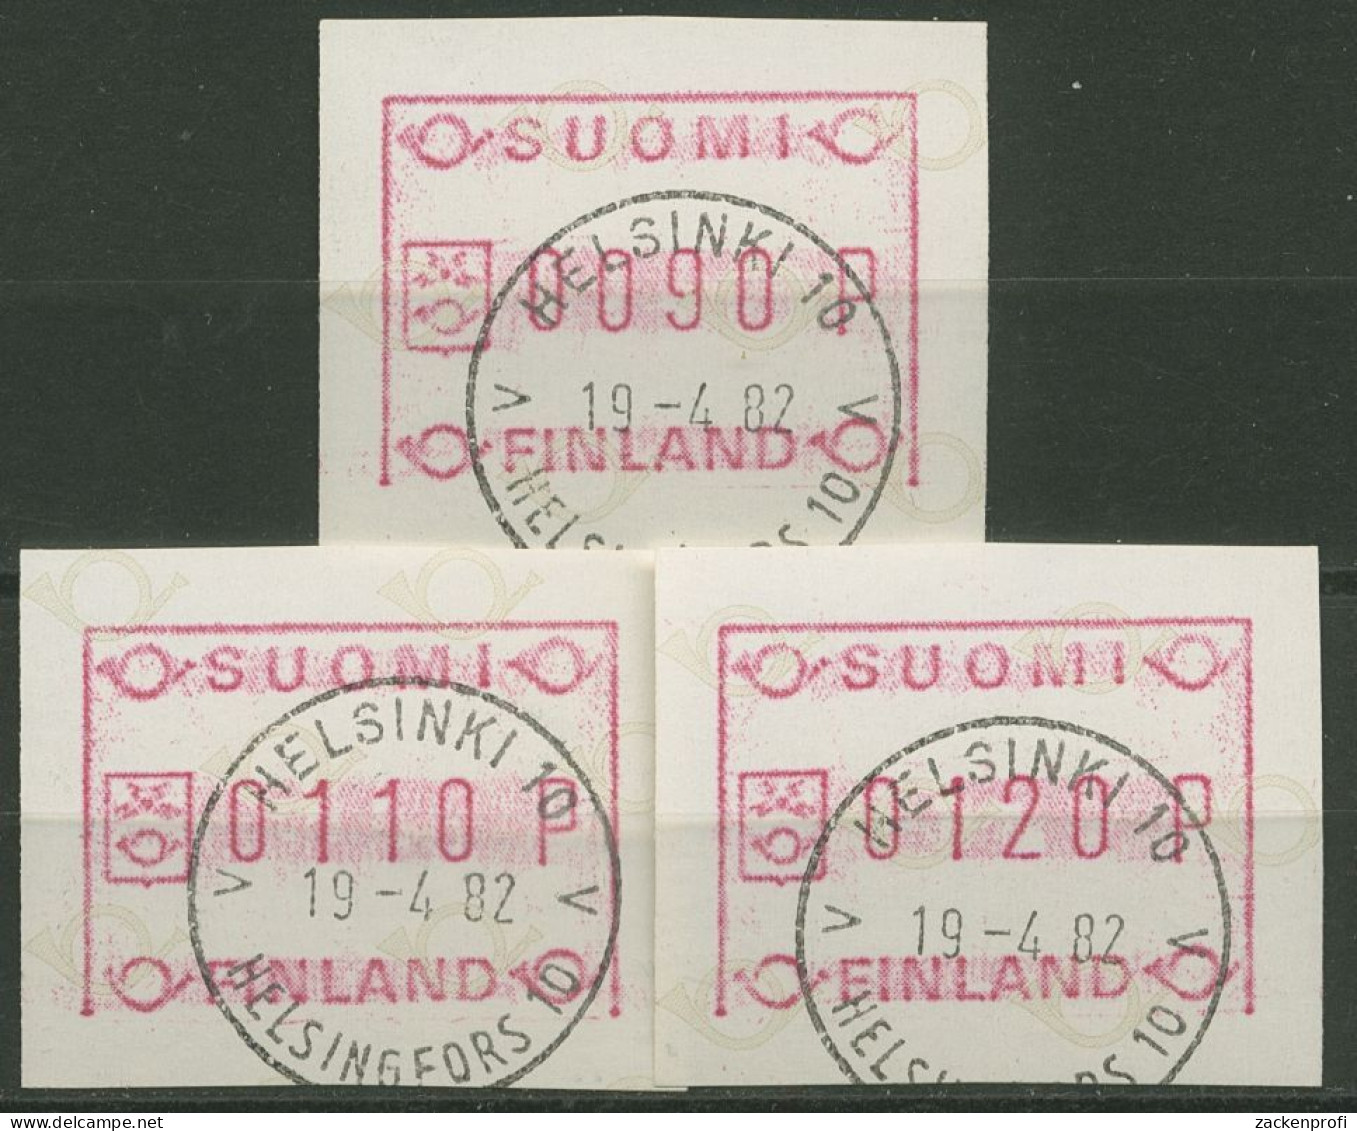 Finnland ATM 1982 Kl. Posthörner Grundlinie Fehlt Satz ATM 1.1 IV S 1 Gestempelt - Vignette [ATM]